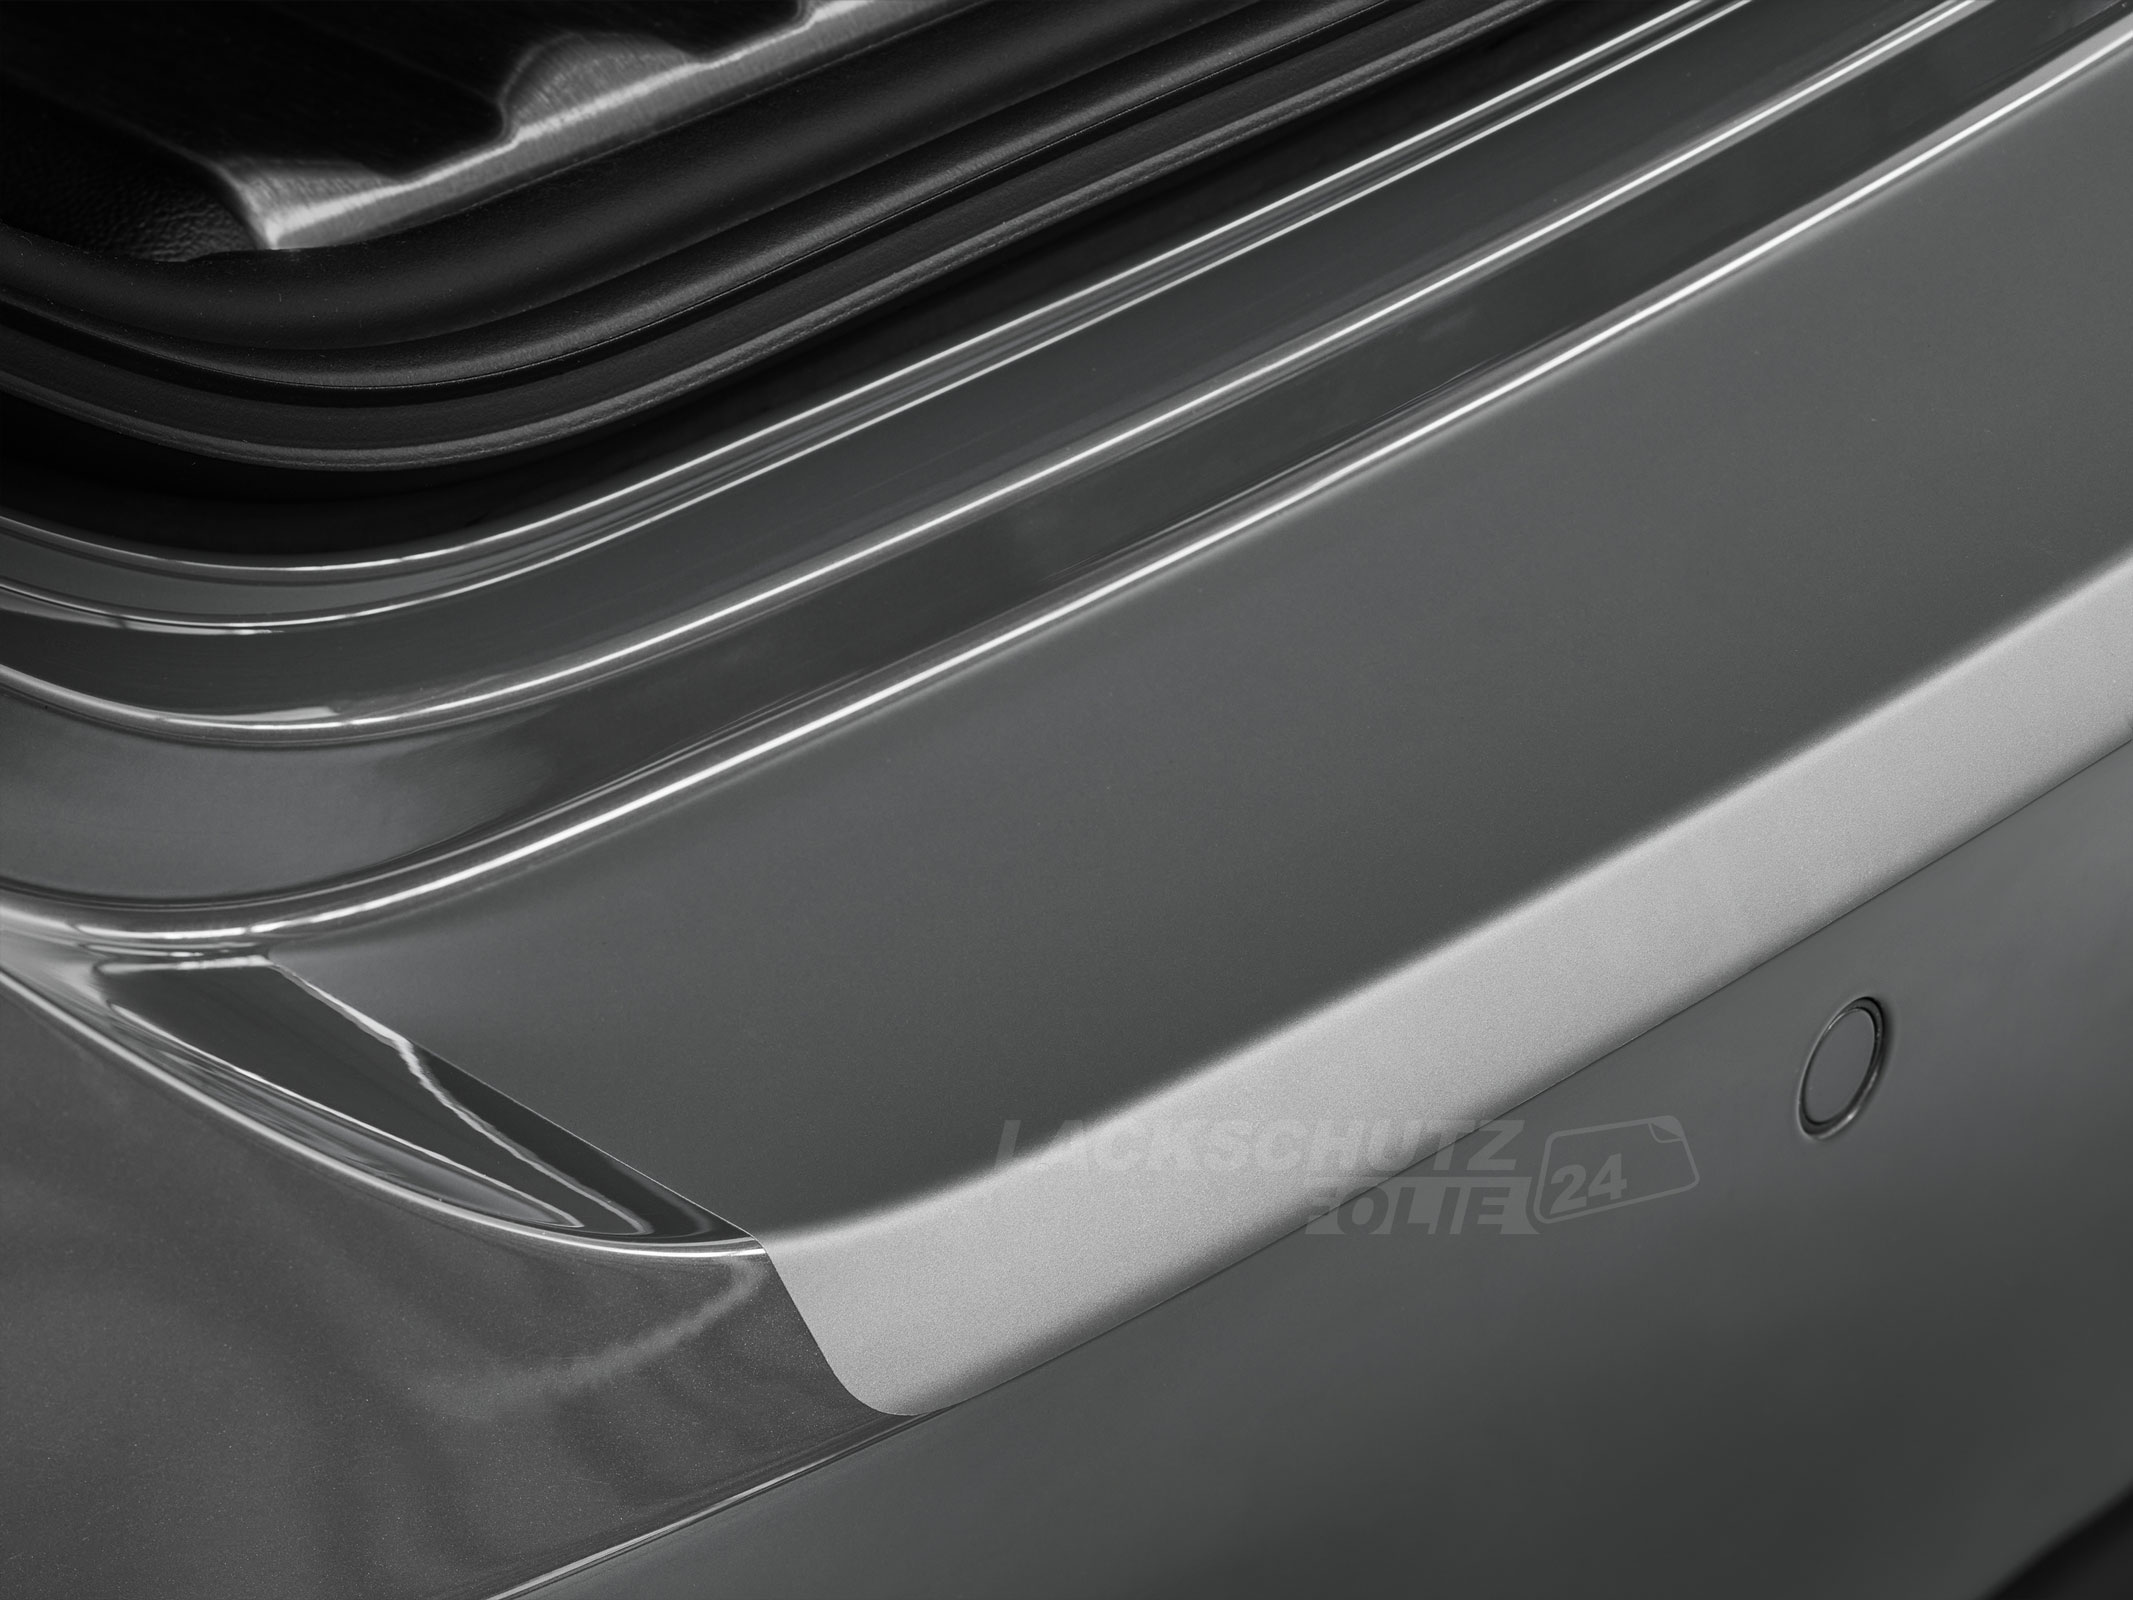 Ladekantenschutzfolie - Transparent Glatt MATT 110 µm stark  für Seat Leon Typ 1P, Facelift, BJ 2009-2012